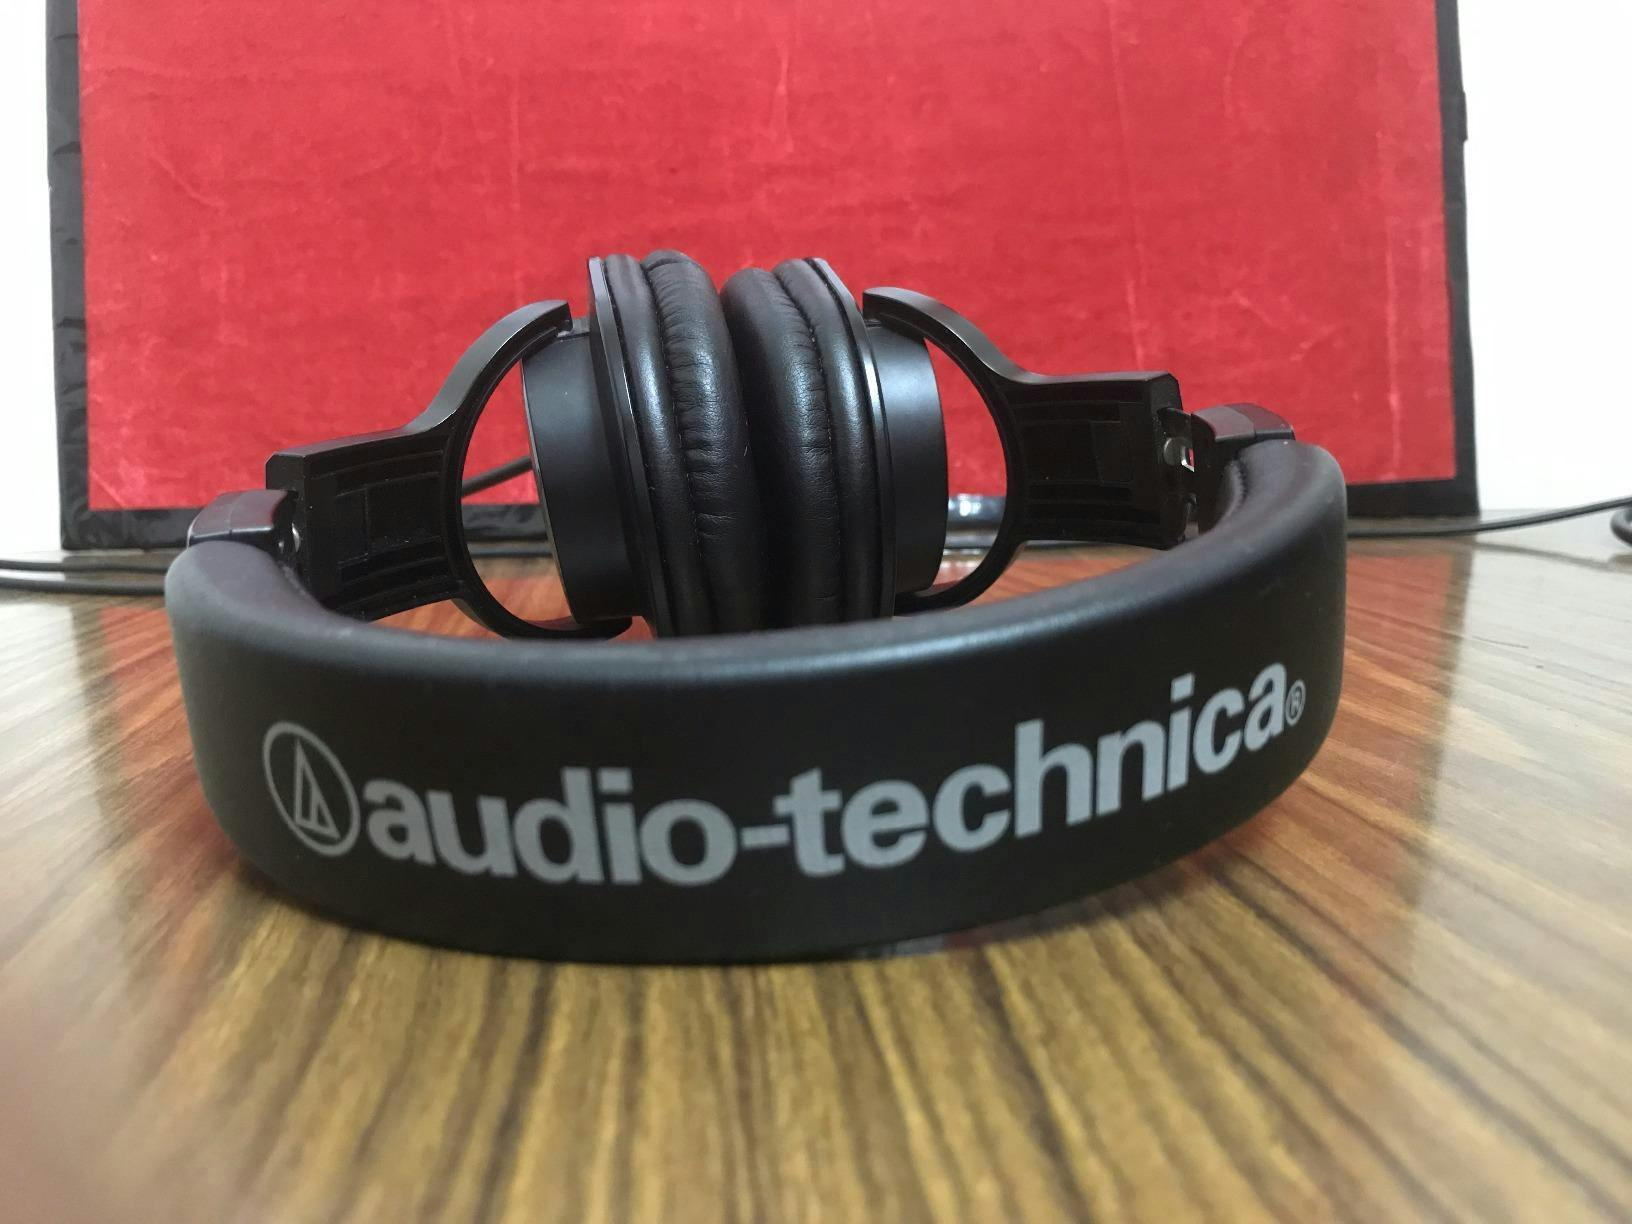 audio technica branding on headband